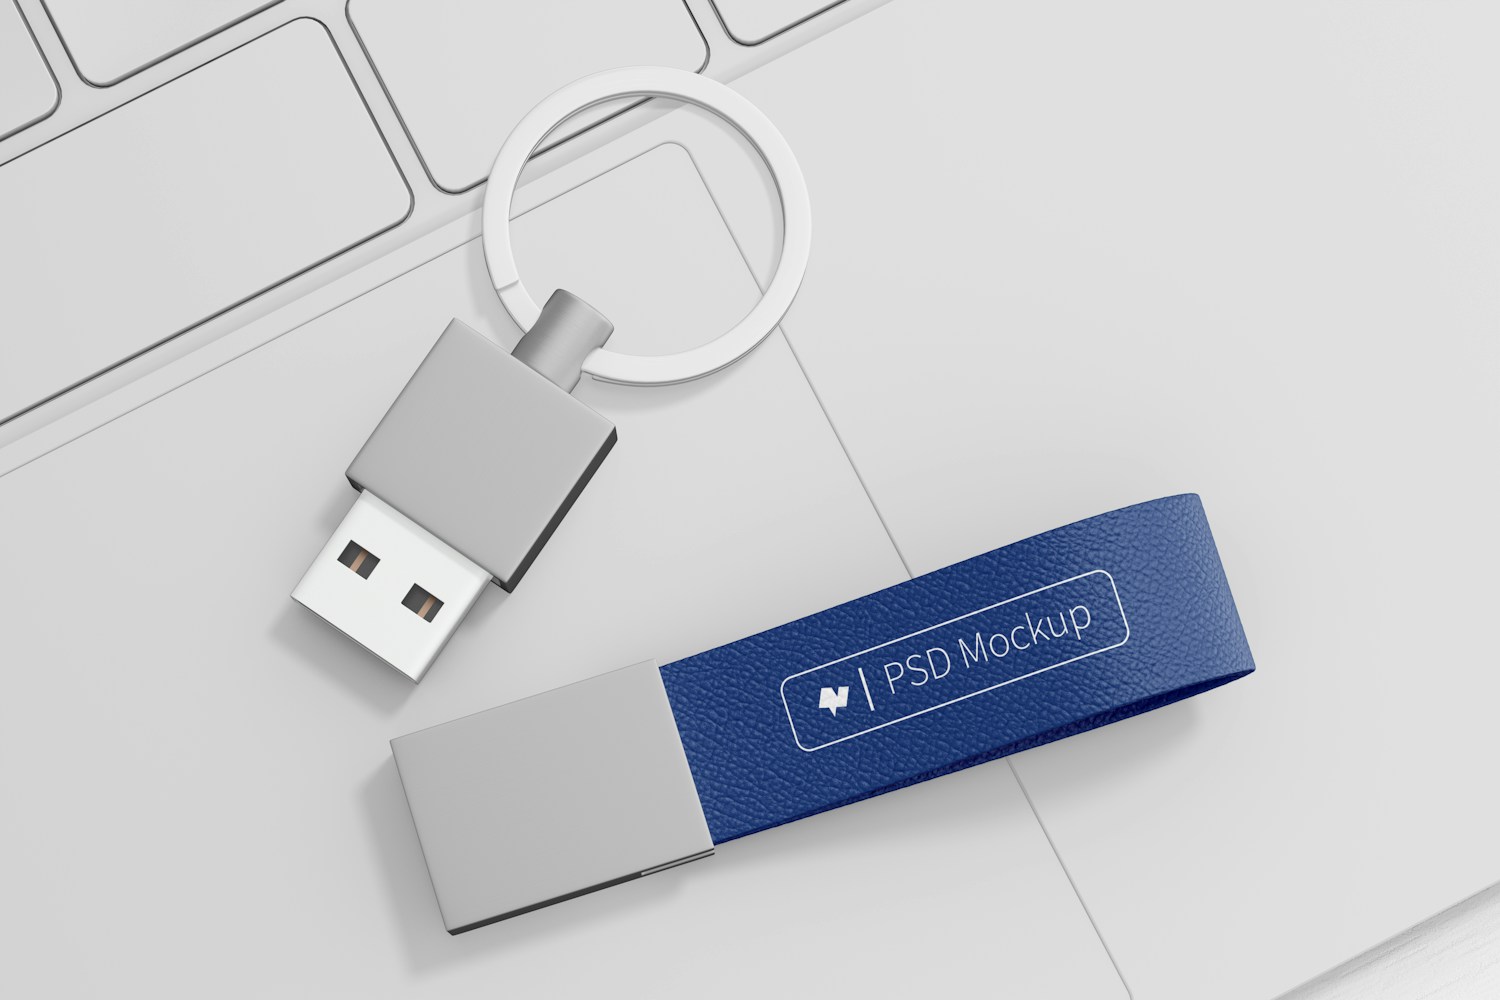 Leather Keychain USB Mockup, Top View